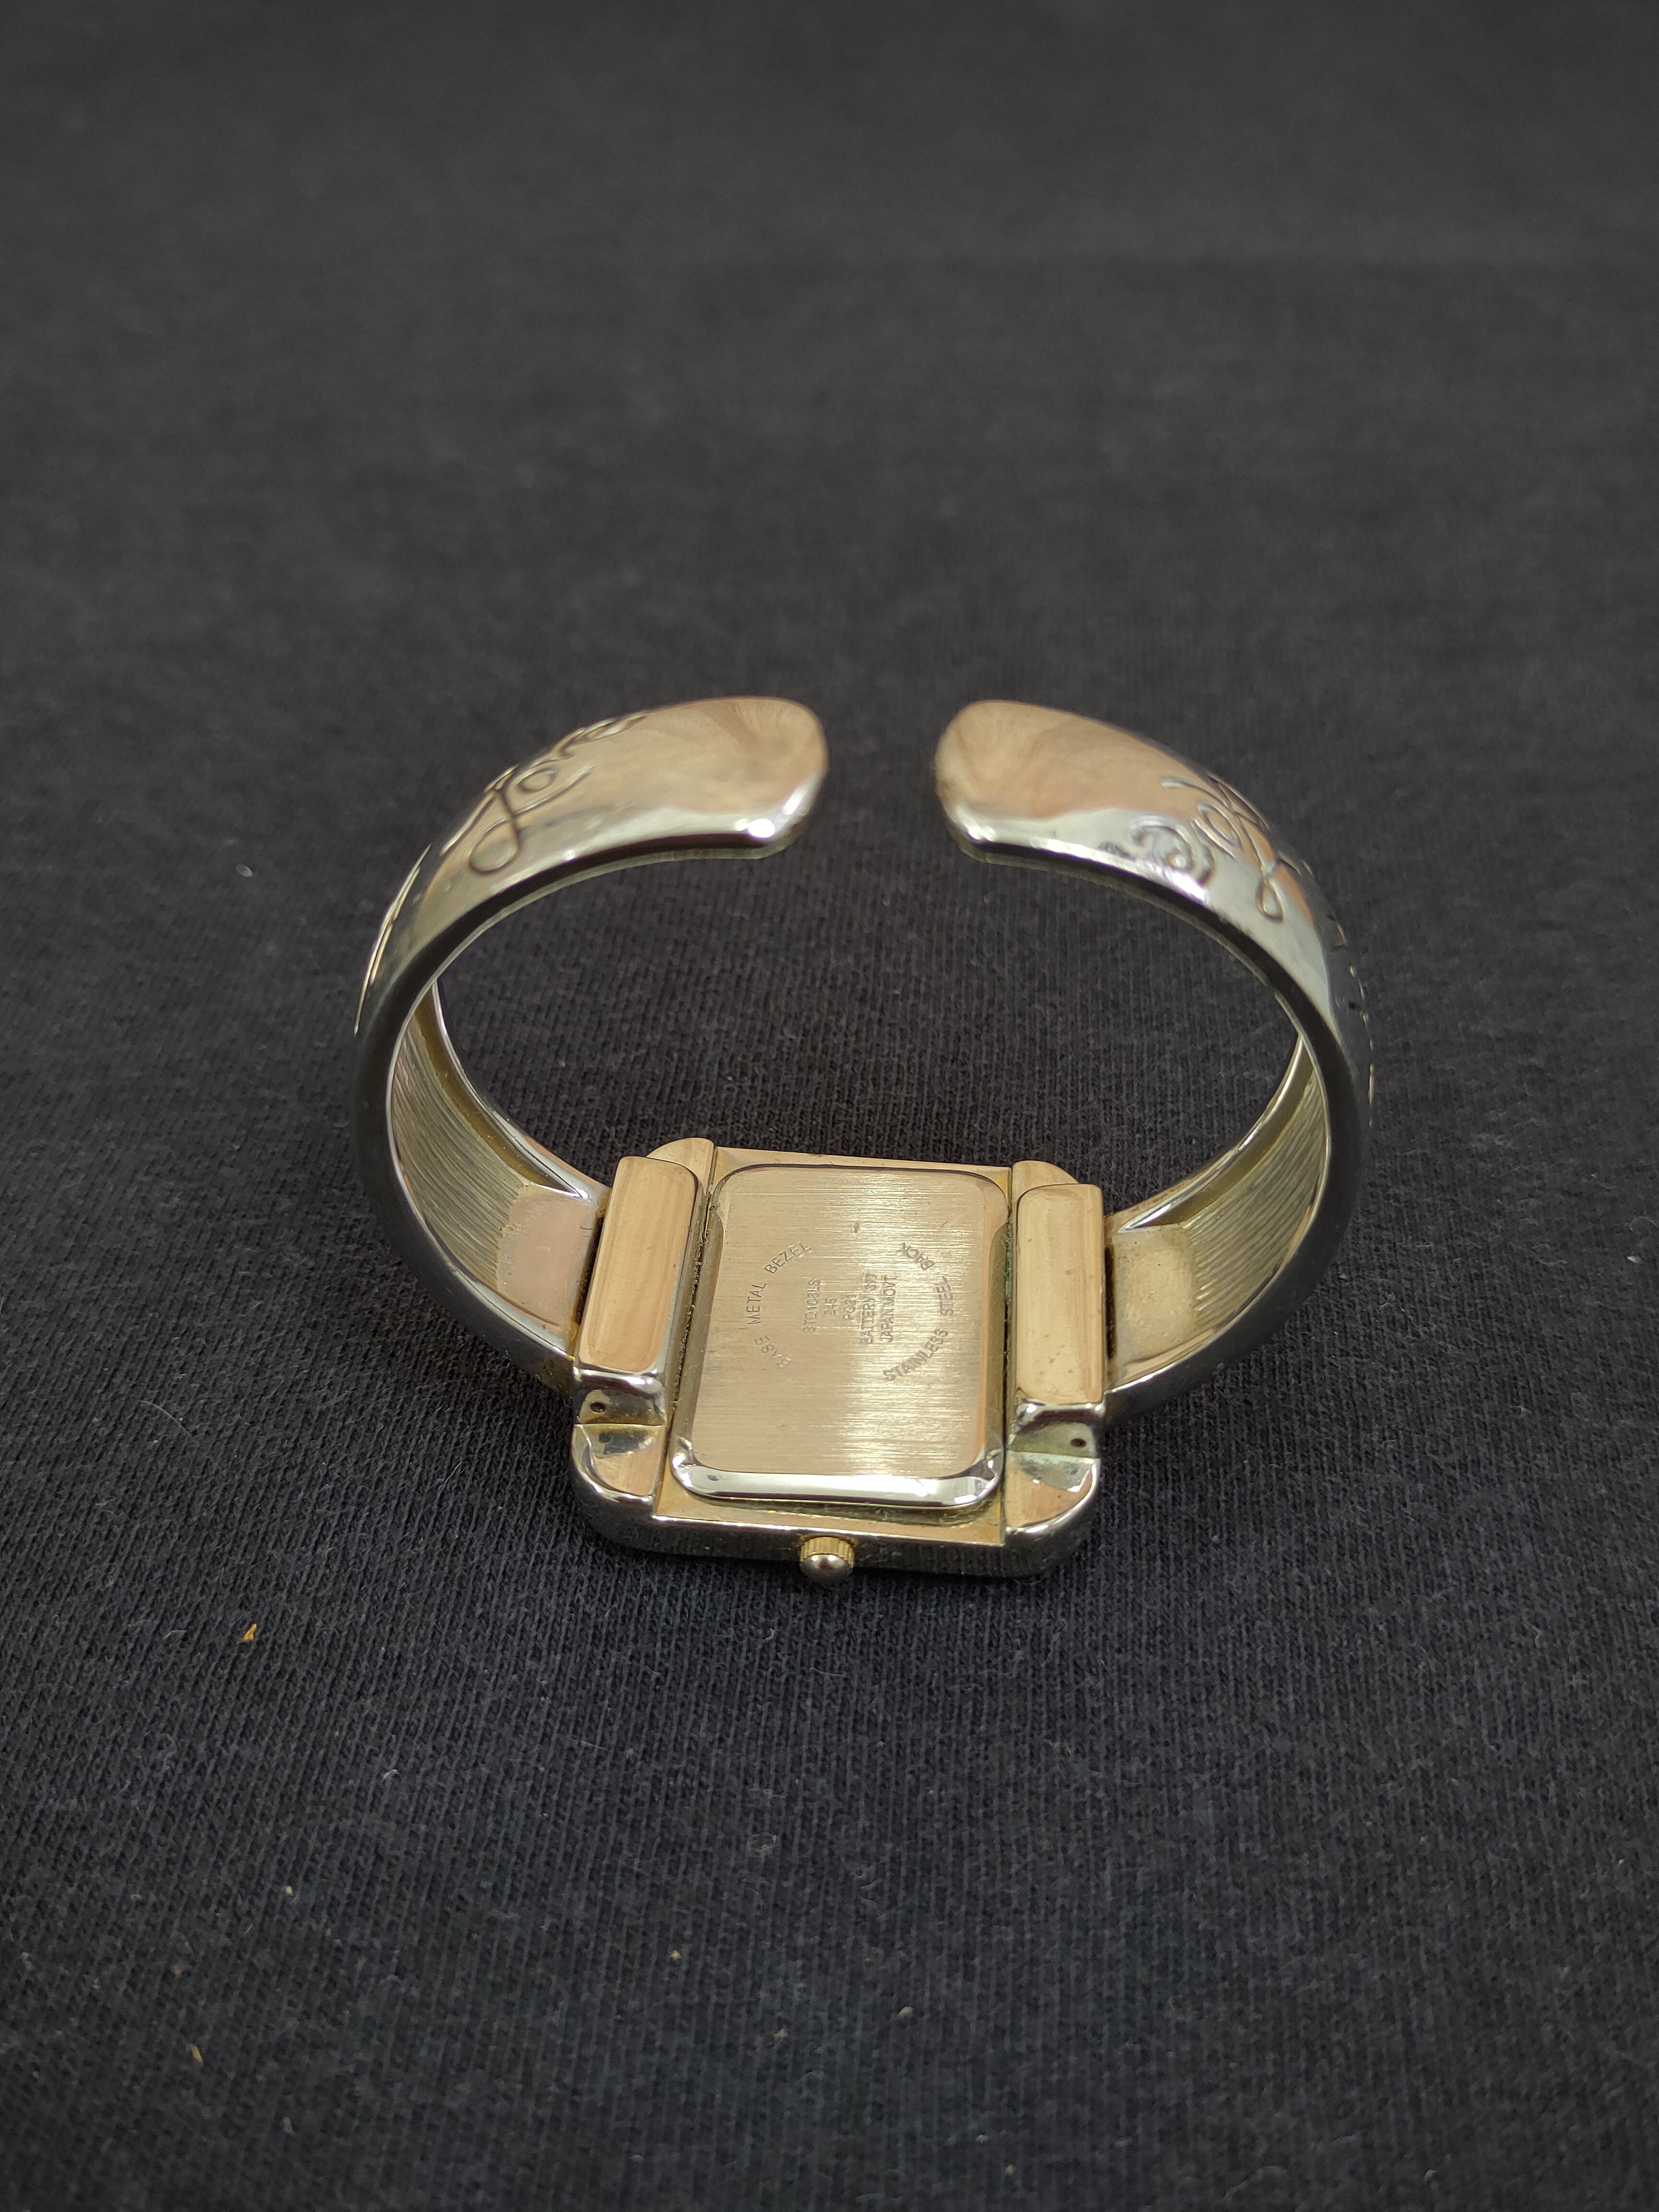 Japanese Brand - Studio Time watch like bracelet art design - 4